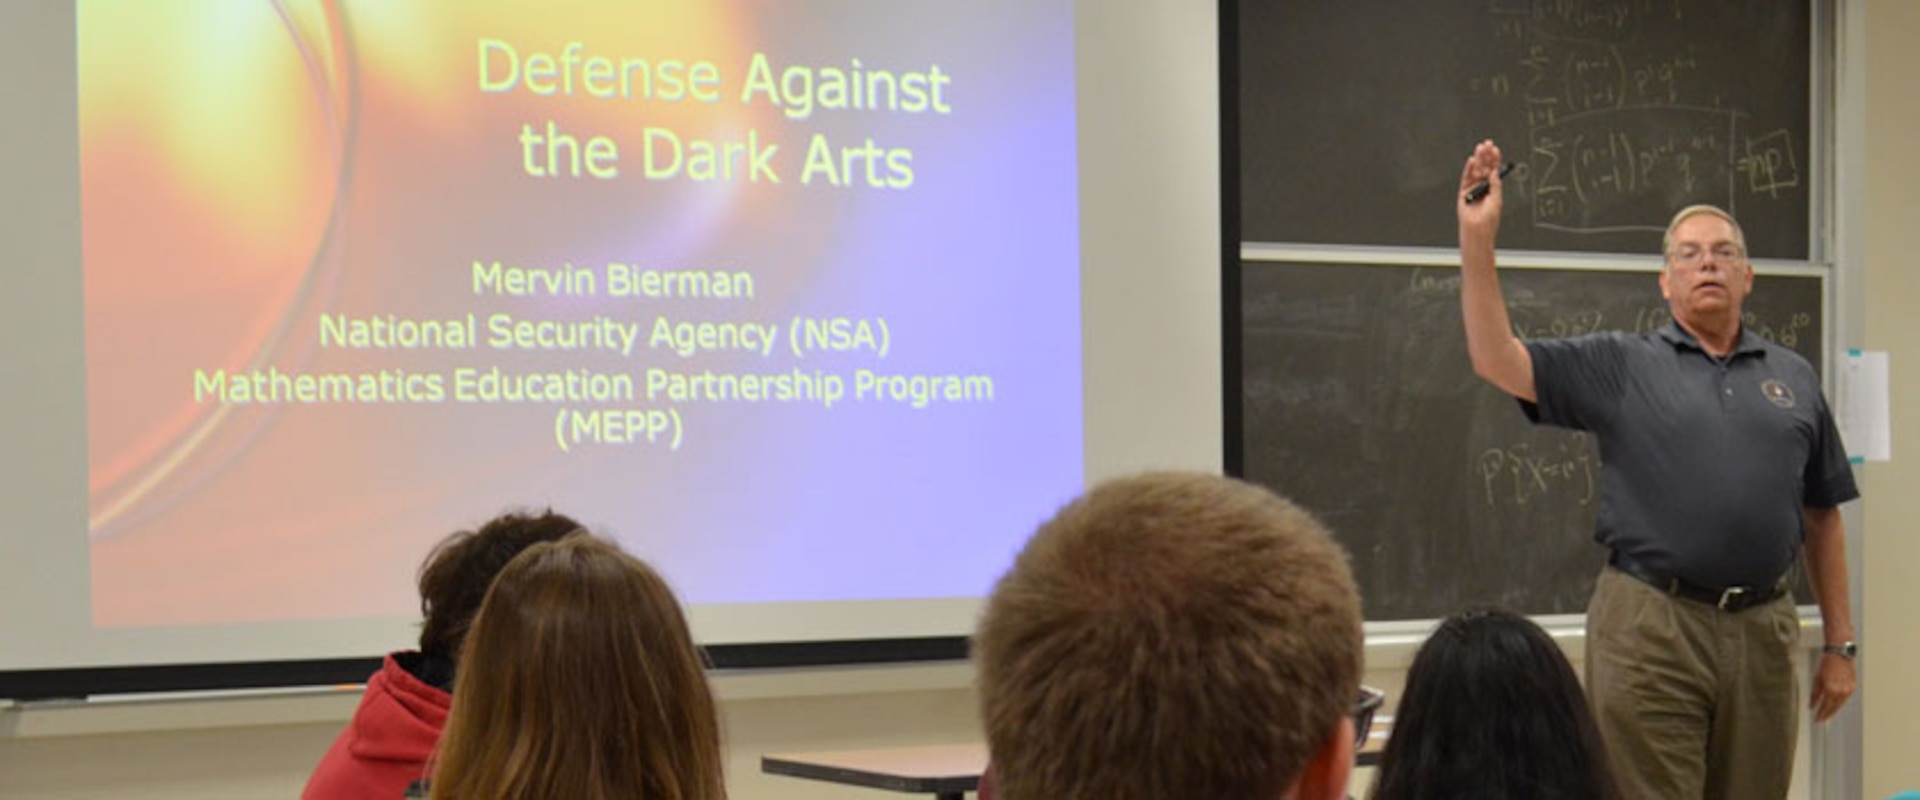 NSA employee Mervin Bierman gave a July presentation to talented high school students in a Rutgers University math program.